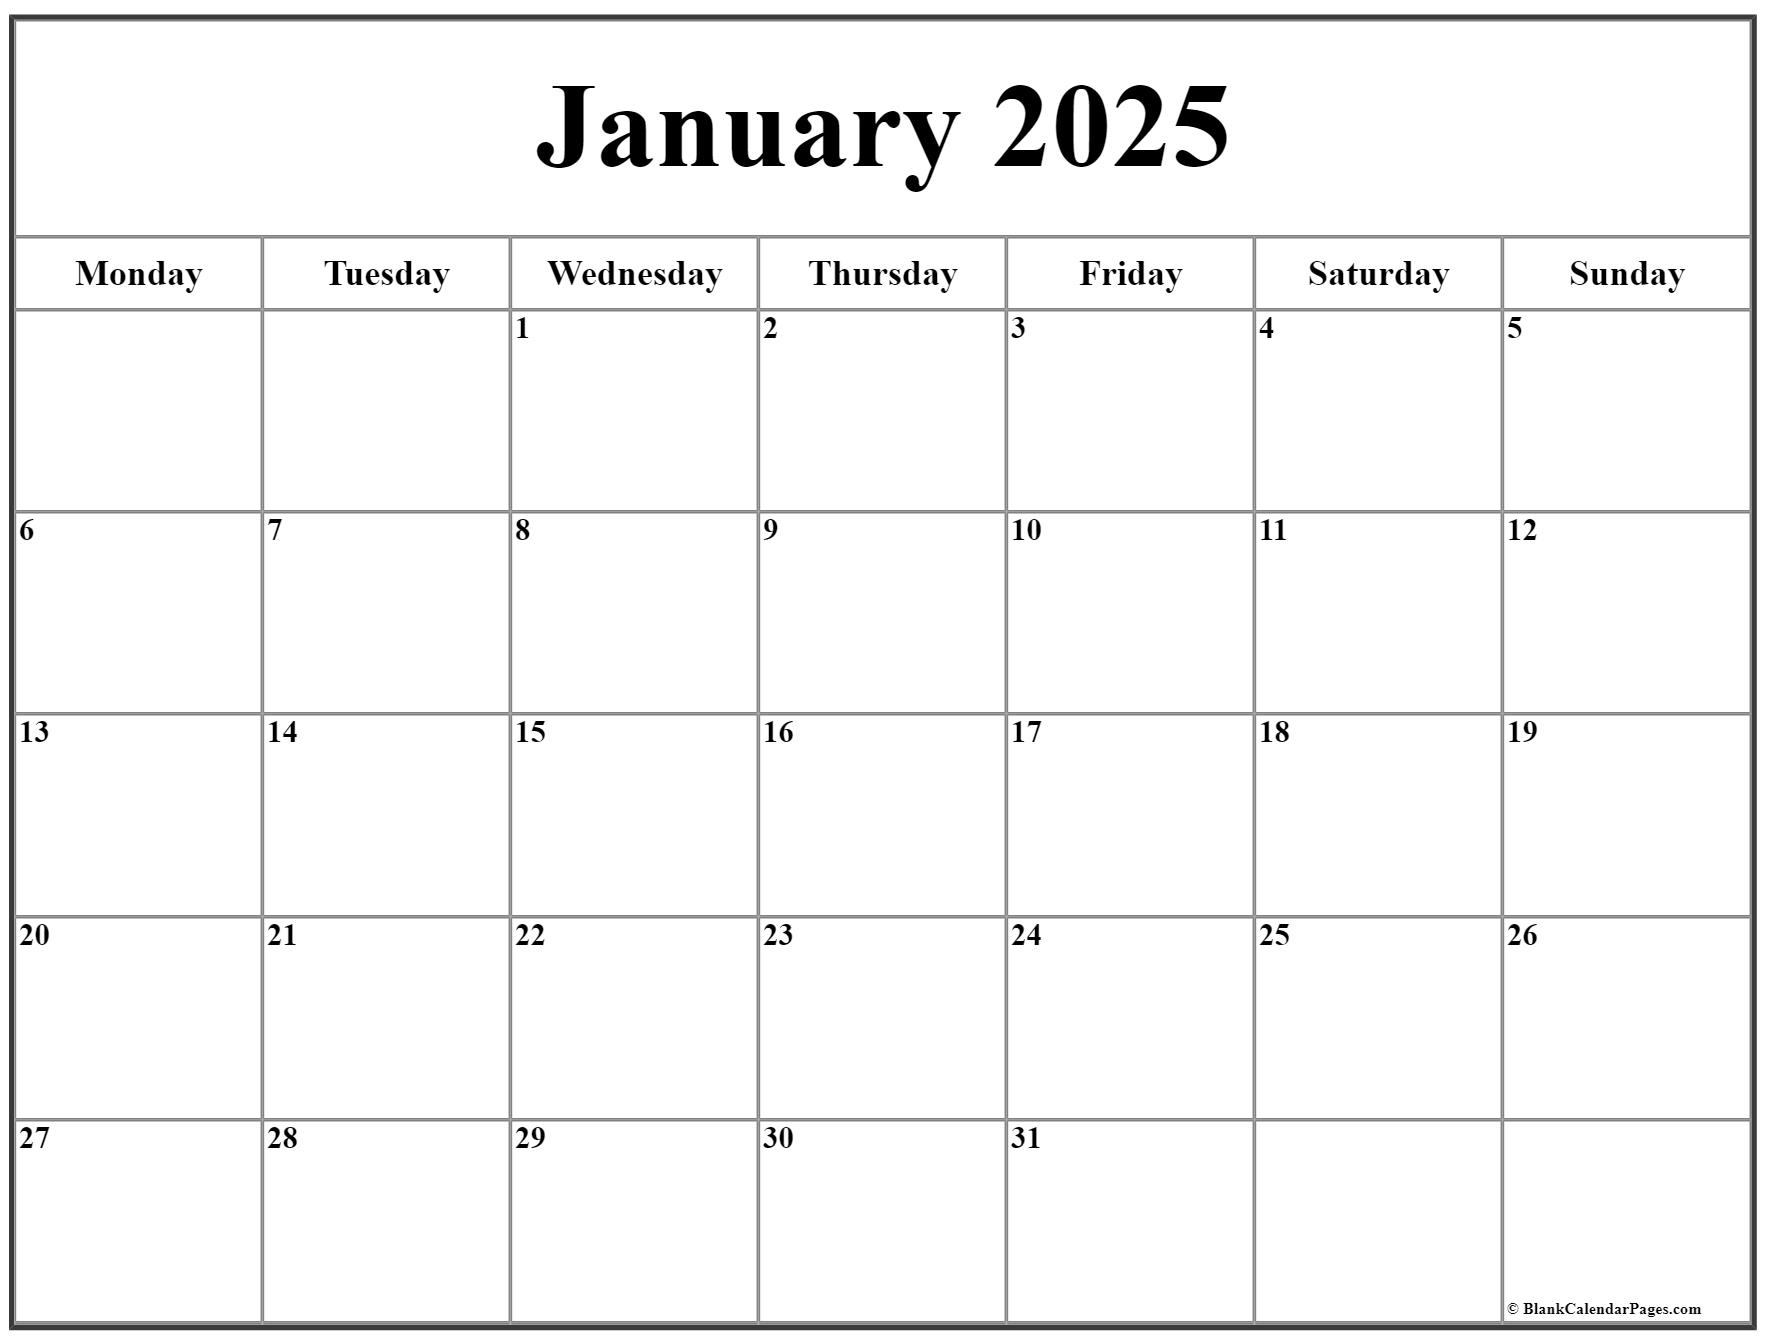 Google Calendar January 2025 